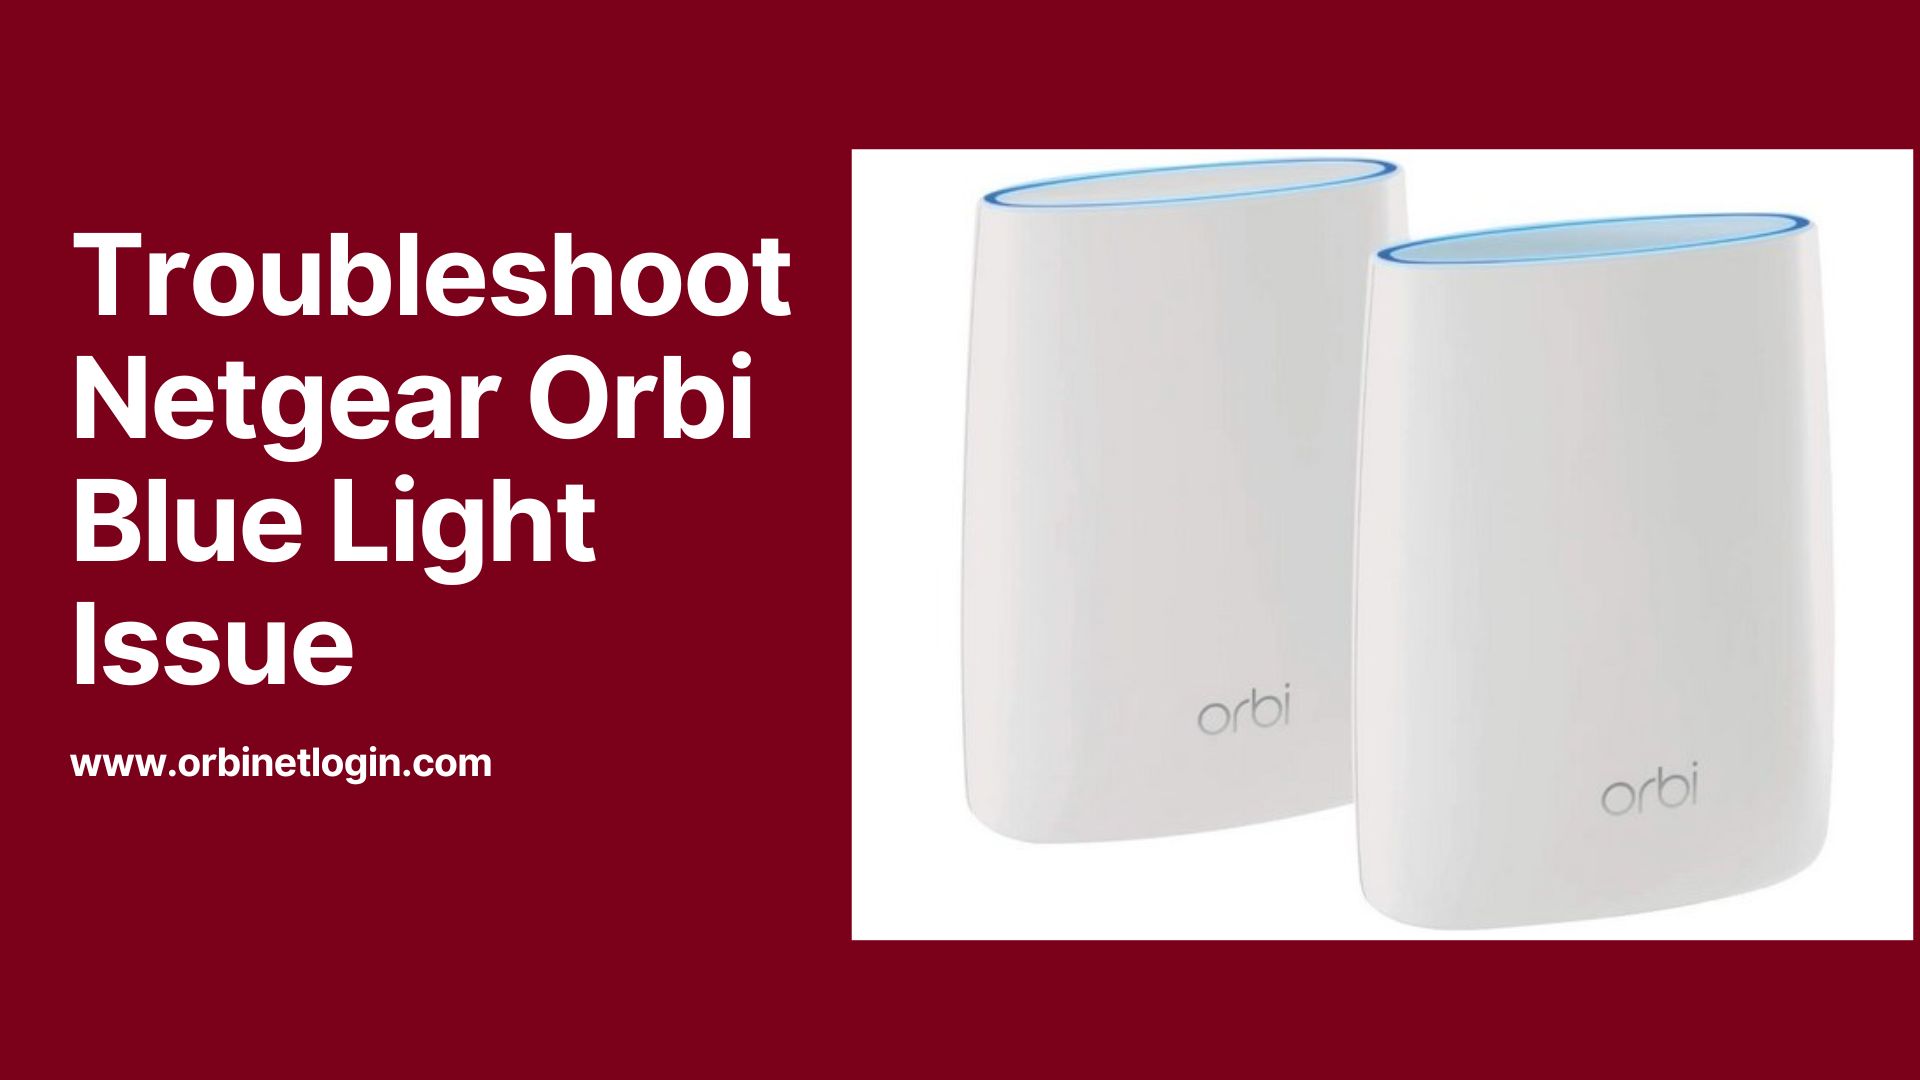 Troubleshoot Netgear Orbi Blue Light Issue